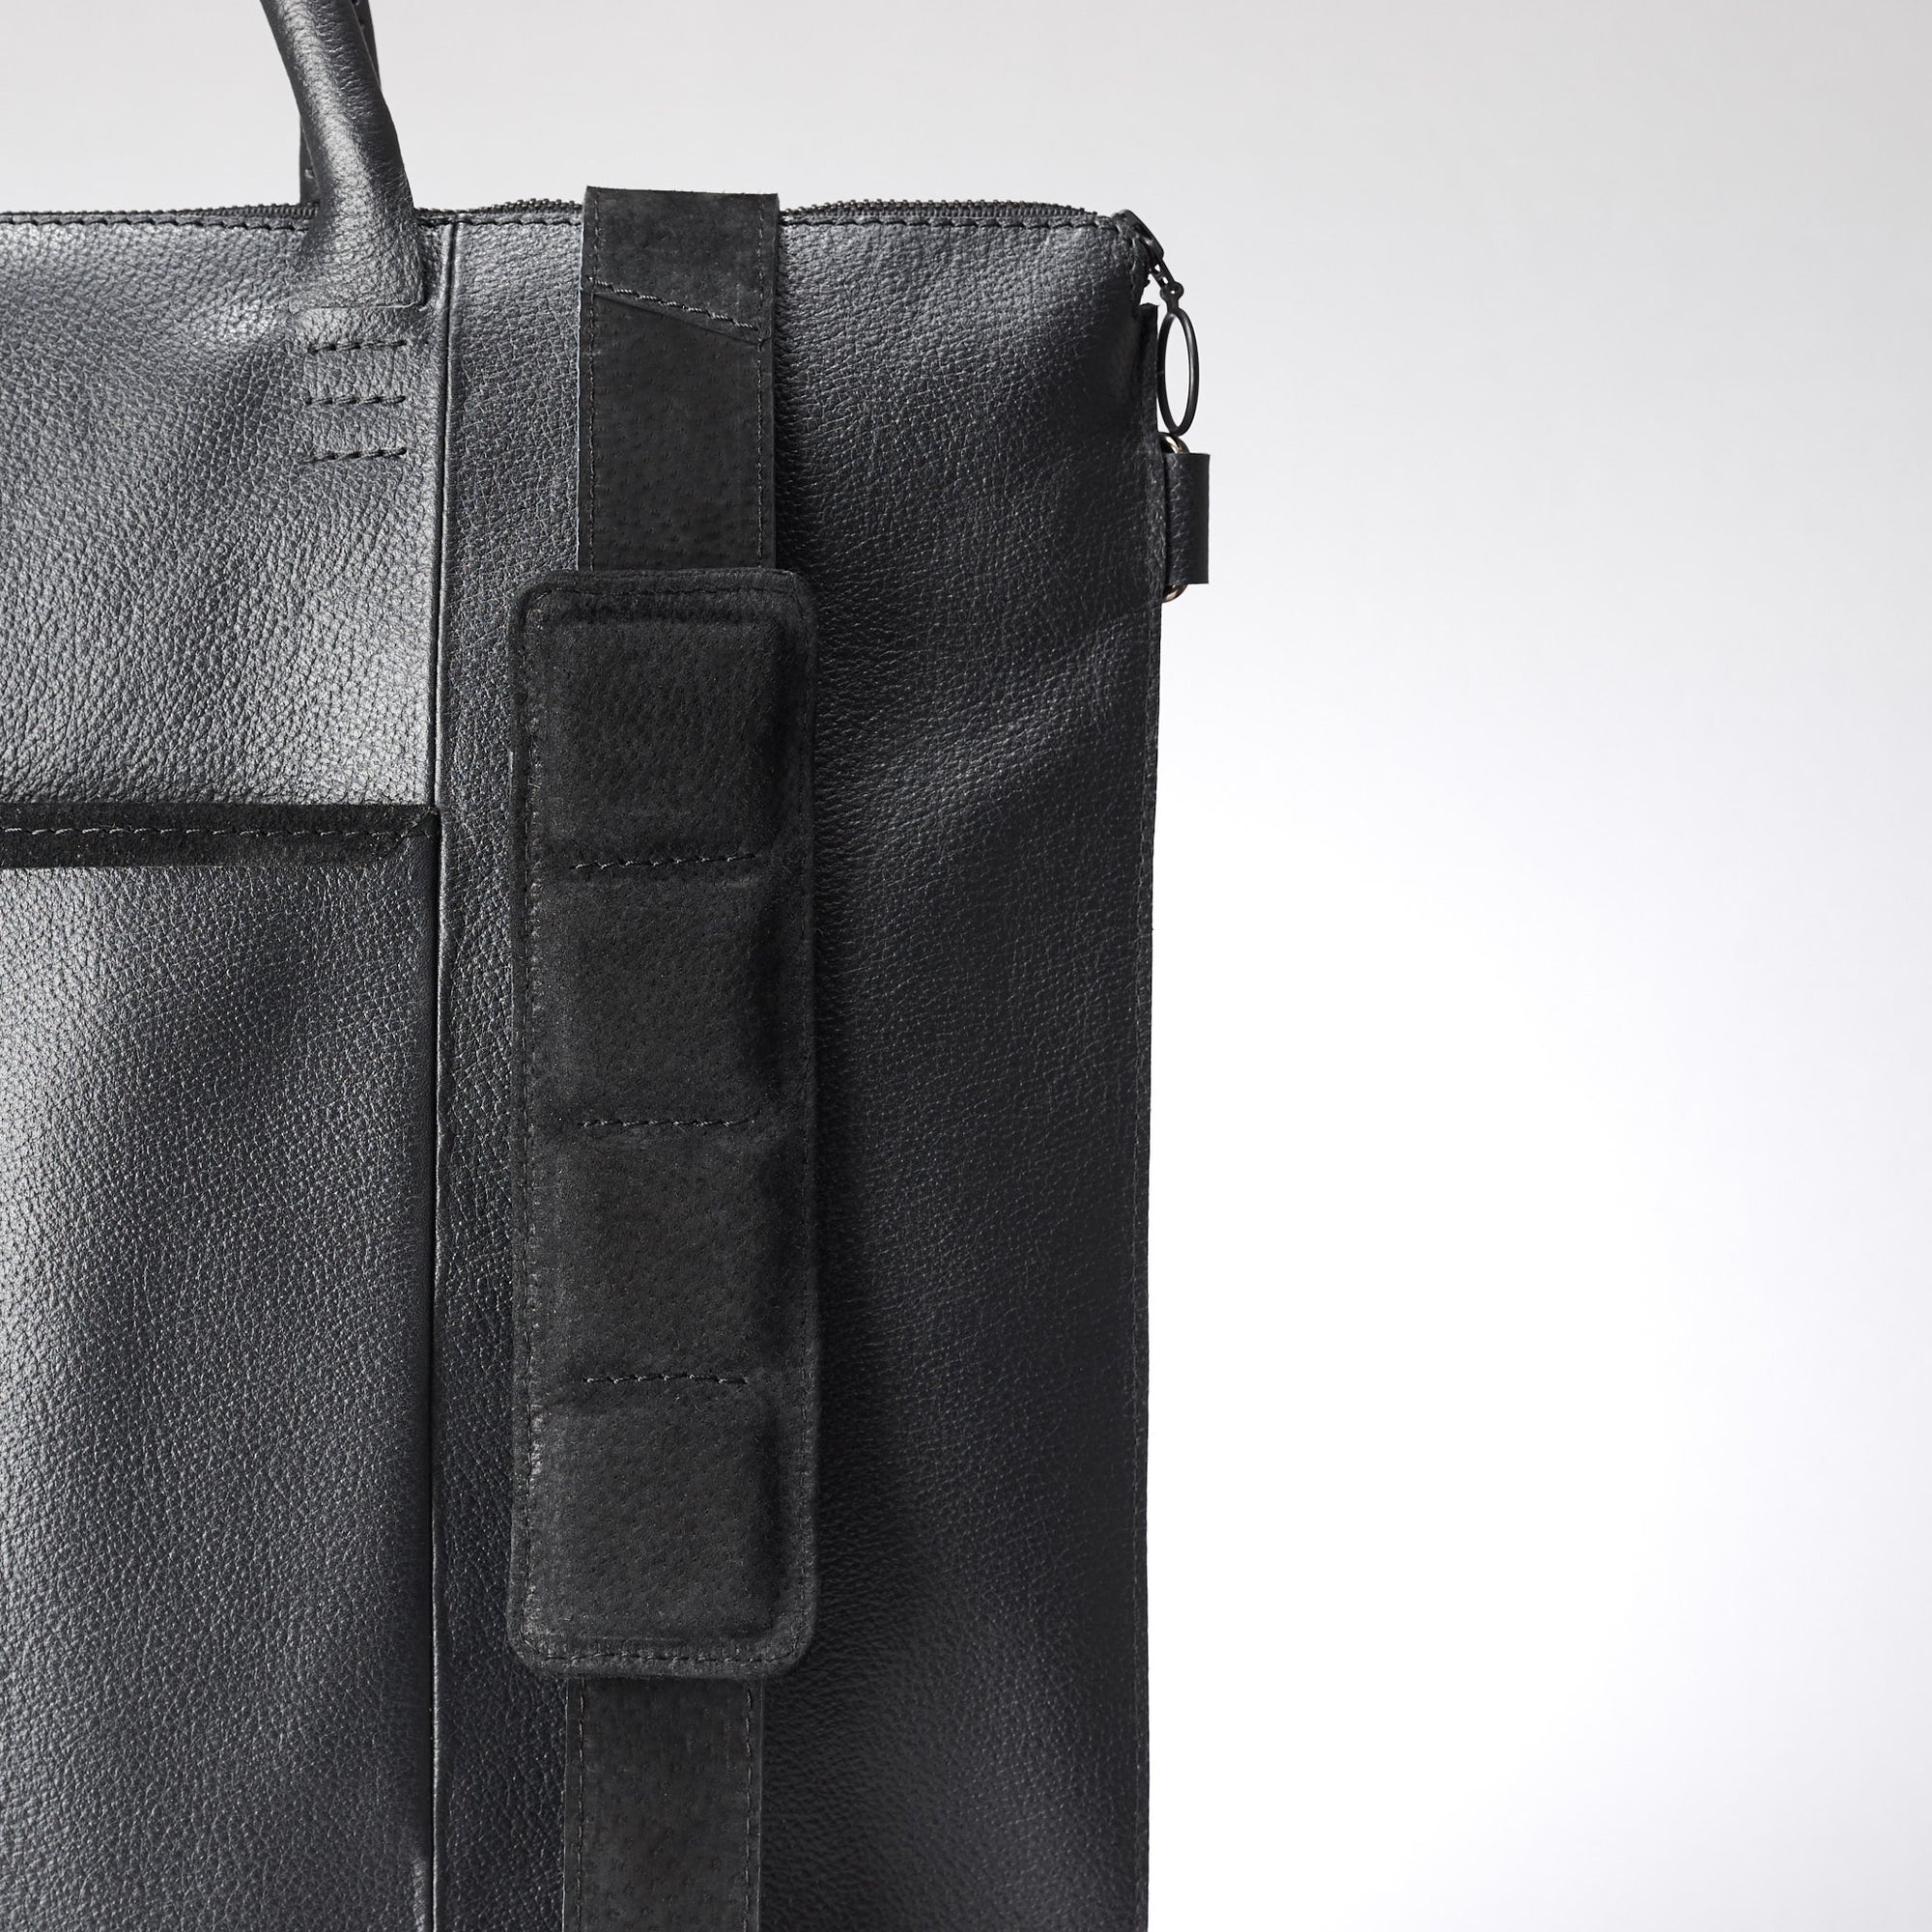 Extra padded shoulder strap. Black tote zipper bag by Capra Leather. Handmade men work bag.